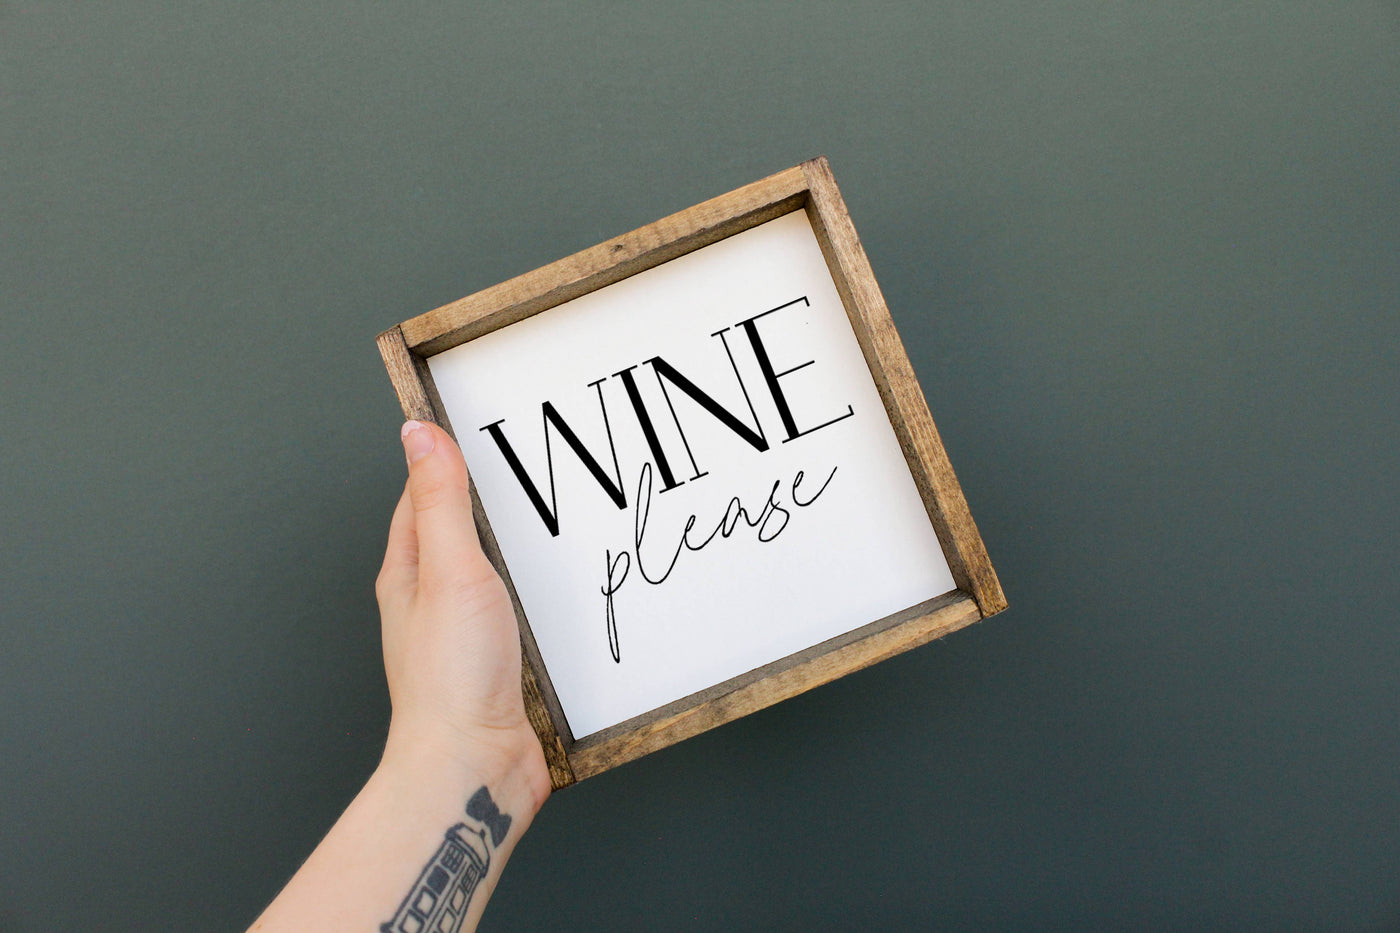 Wine Please Wood Sign